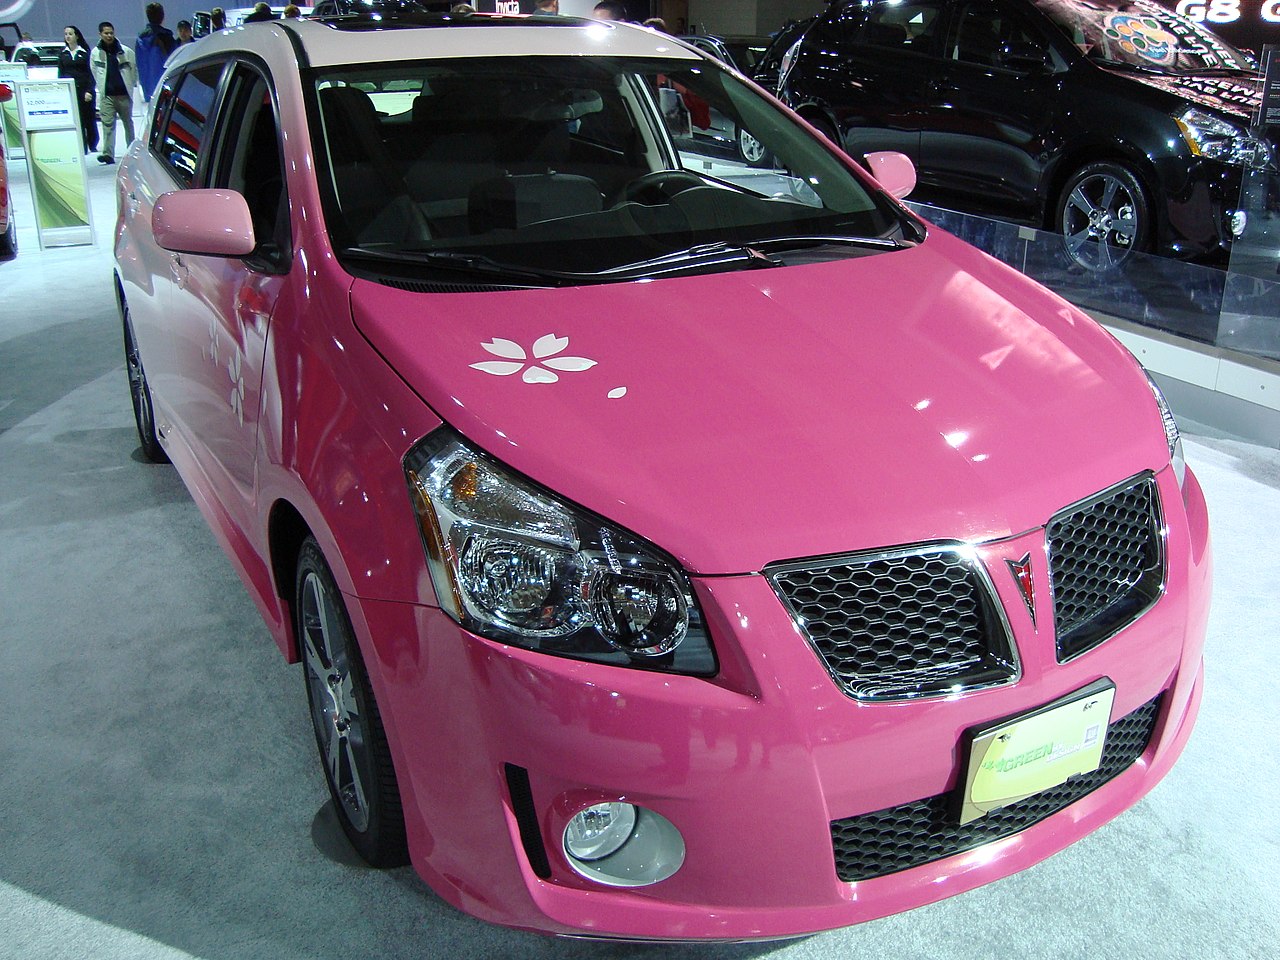 File:Pontiac Vibe in pink (3286096506).jpg - Wikimedia Commons